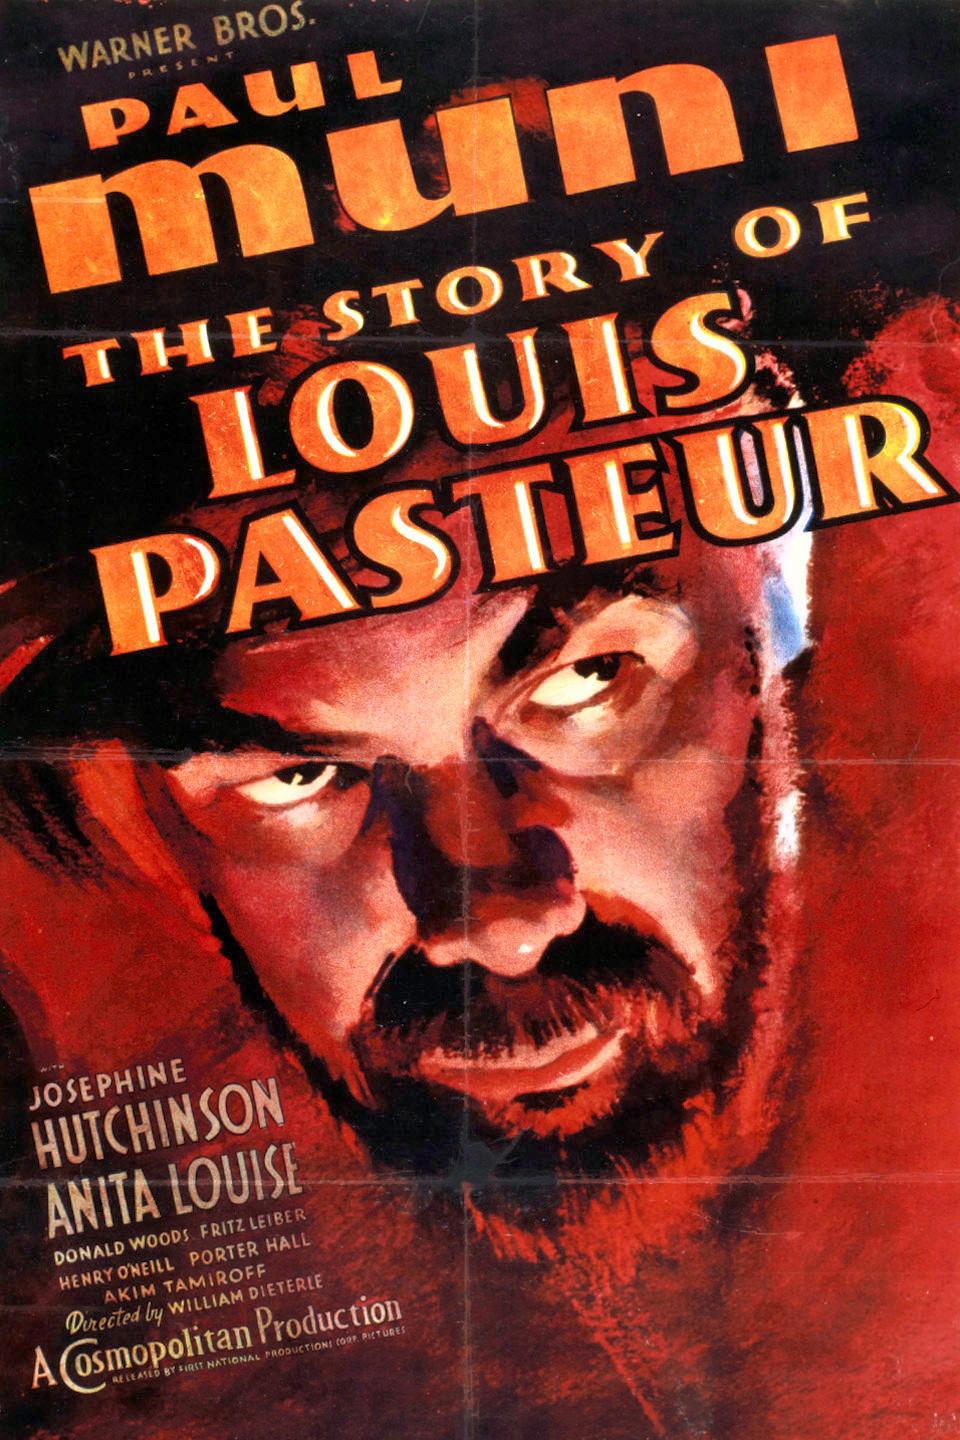 द स्टोरी ऑफ लुईस पास्टर (The Story of Louis Pasteur )